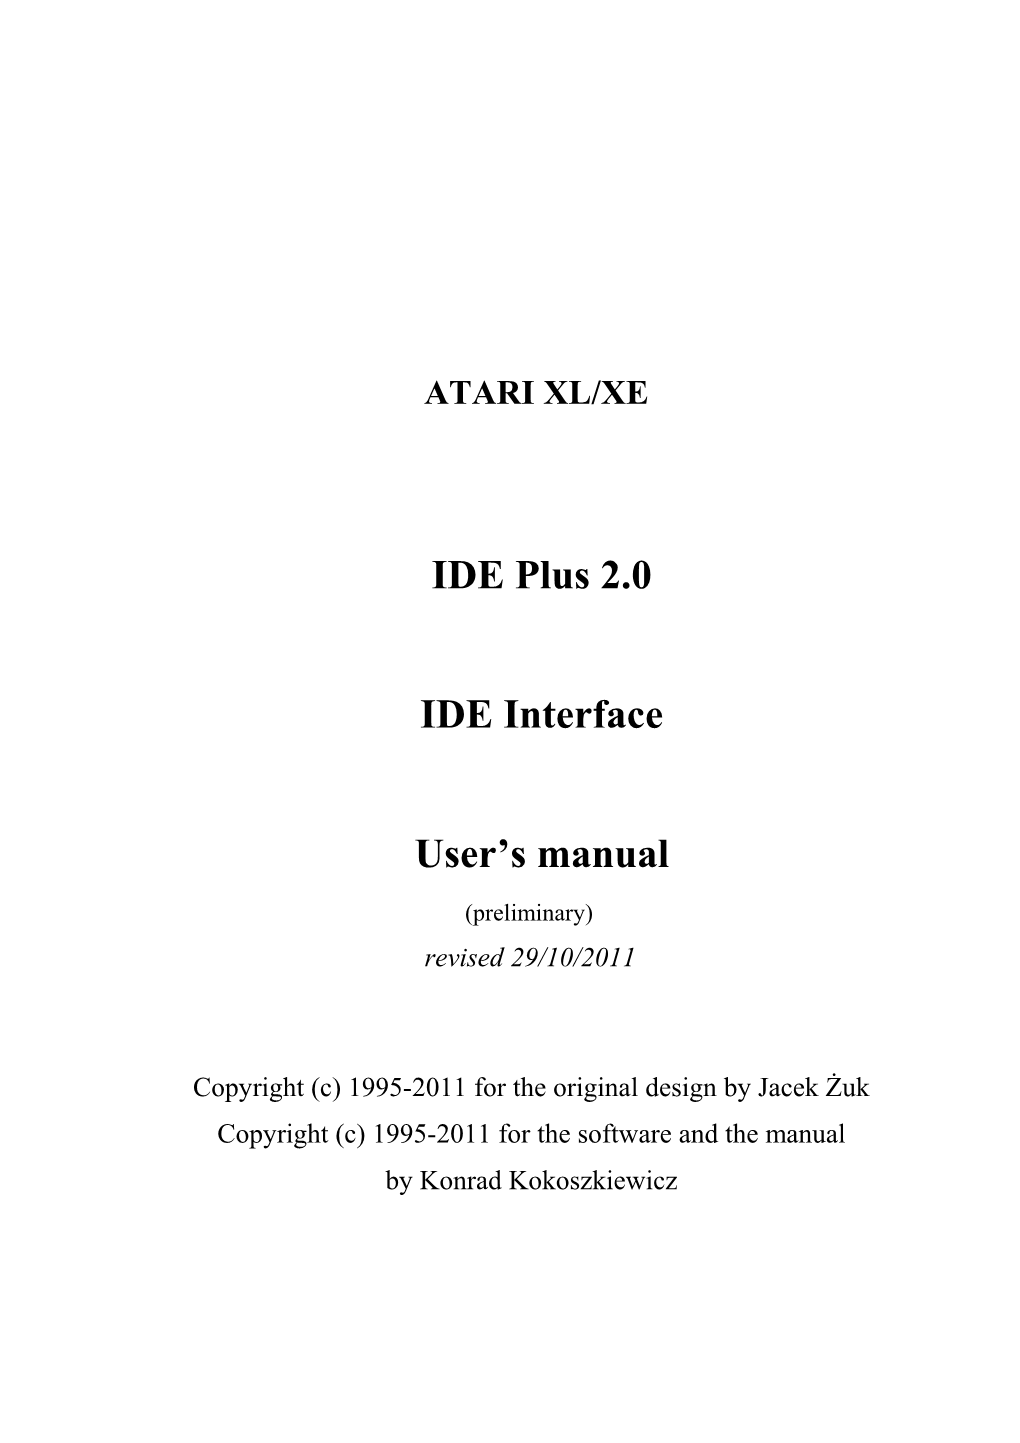 KMK/JŻ IDE User's Manual